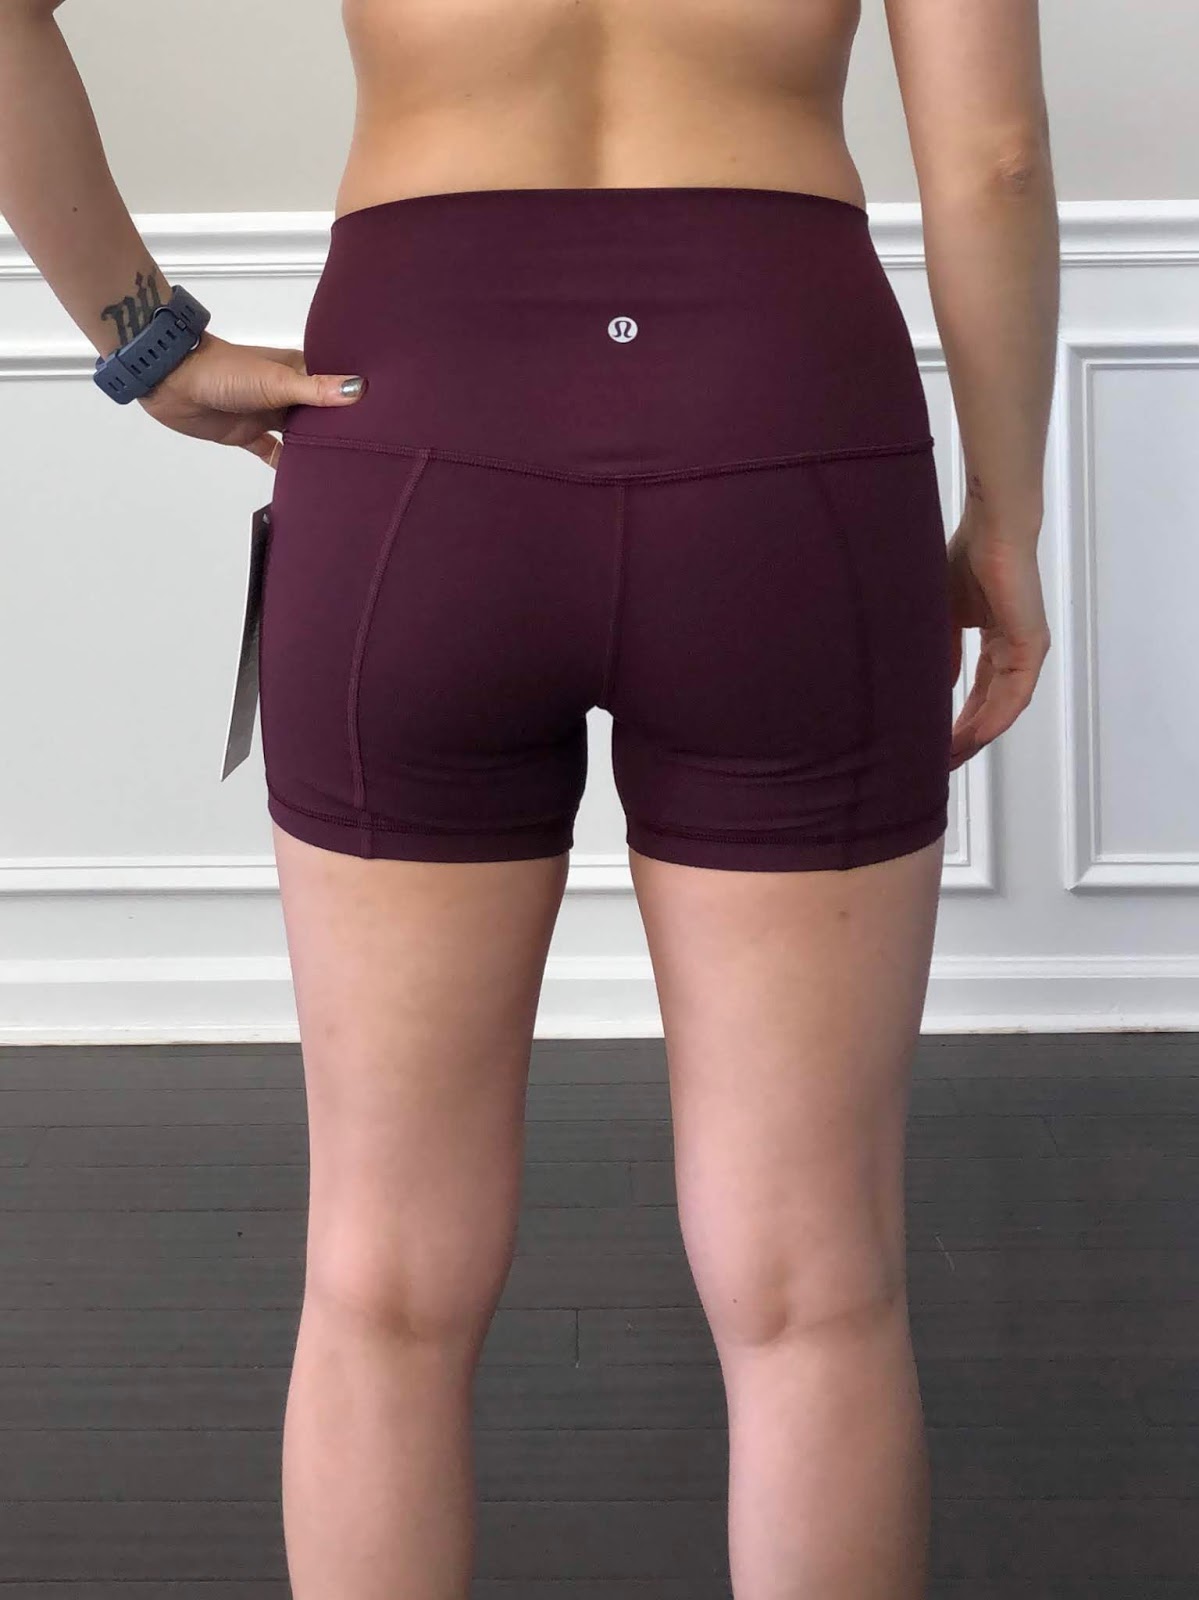 align shorts 6 inch